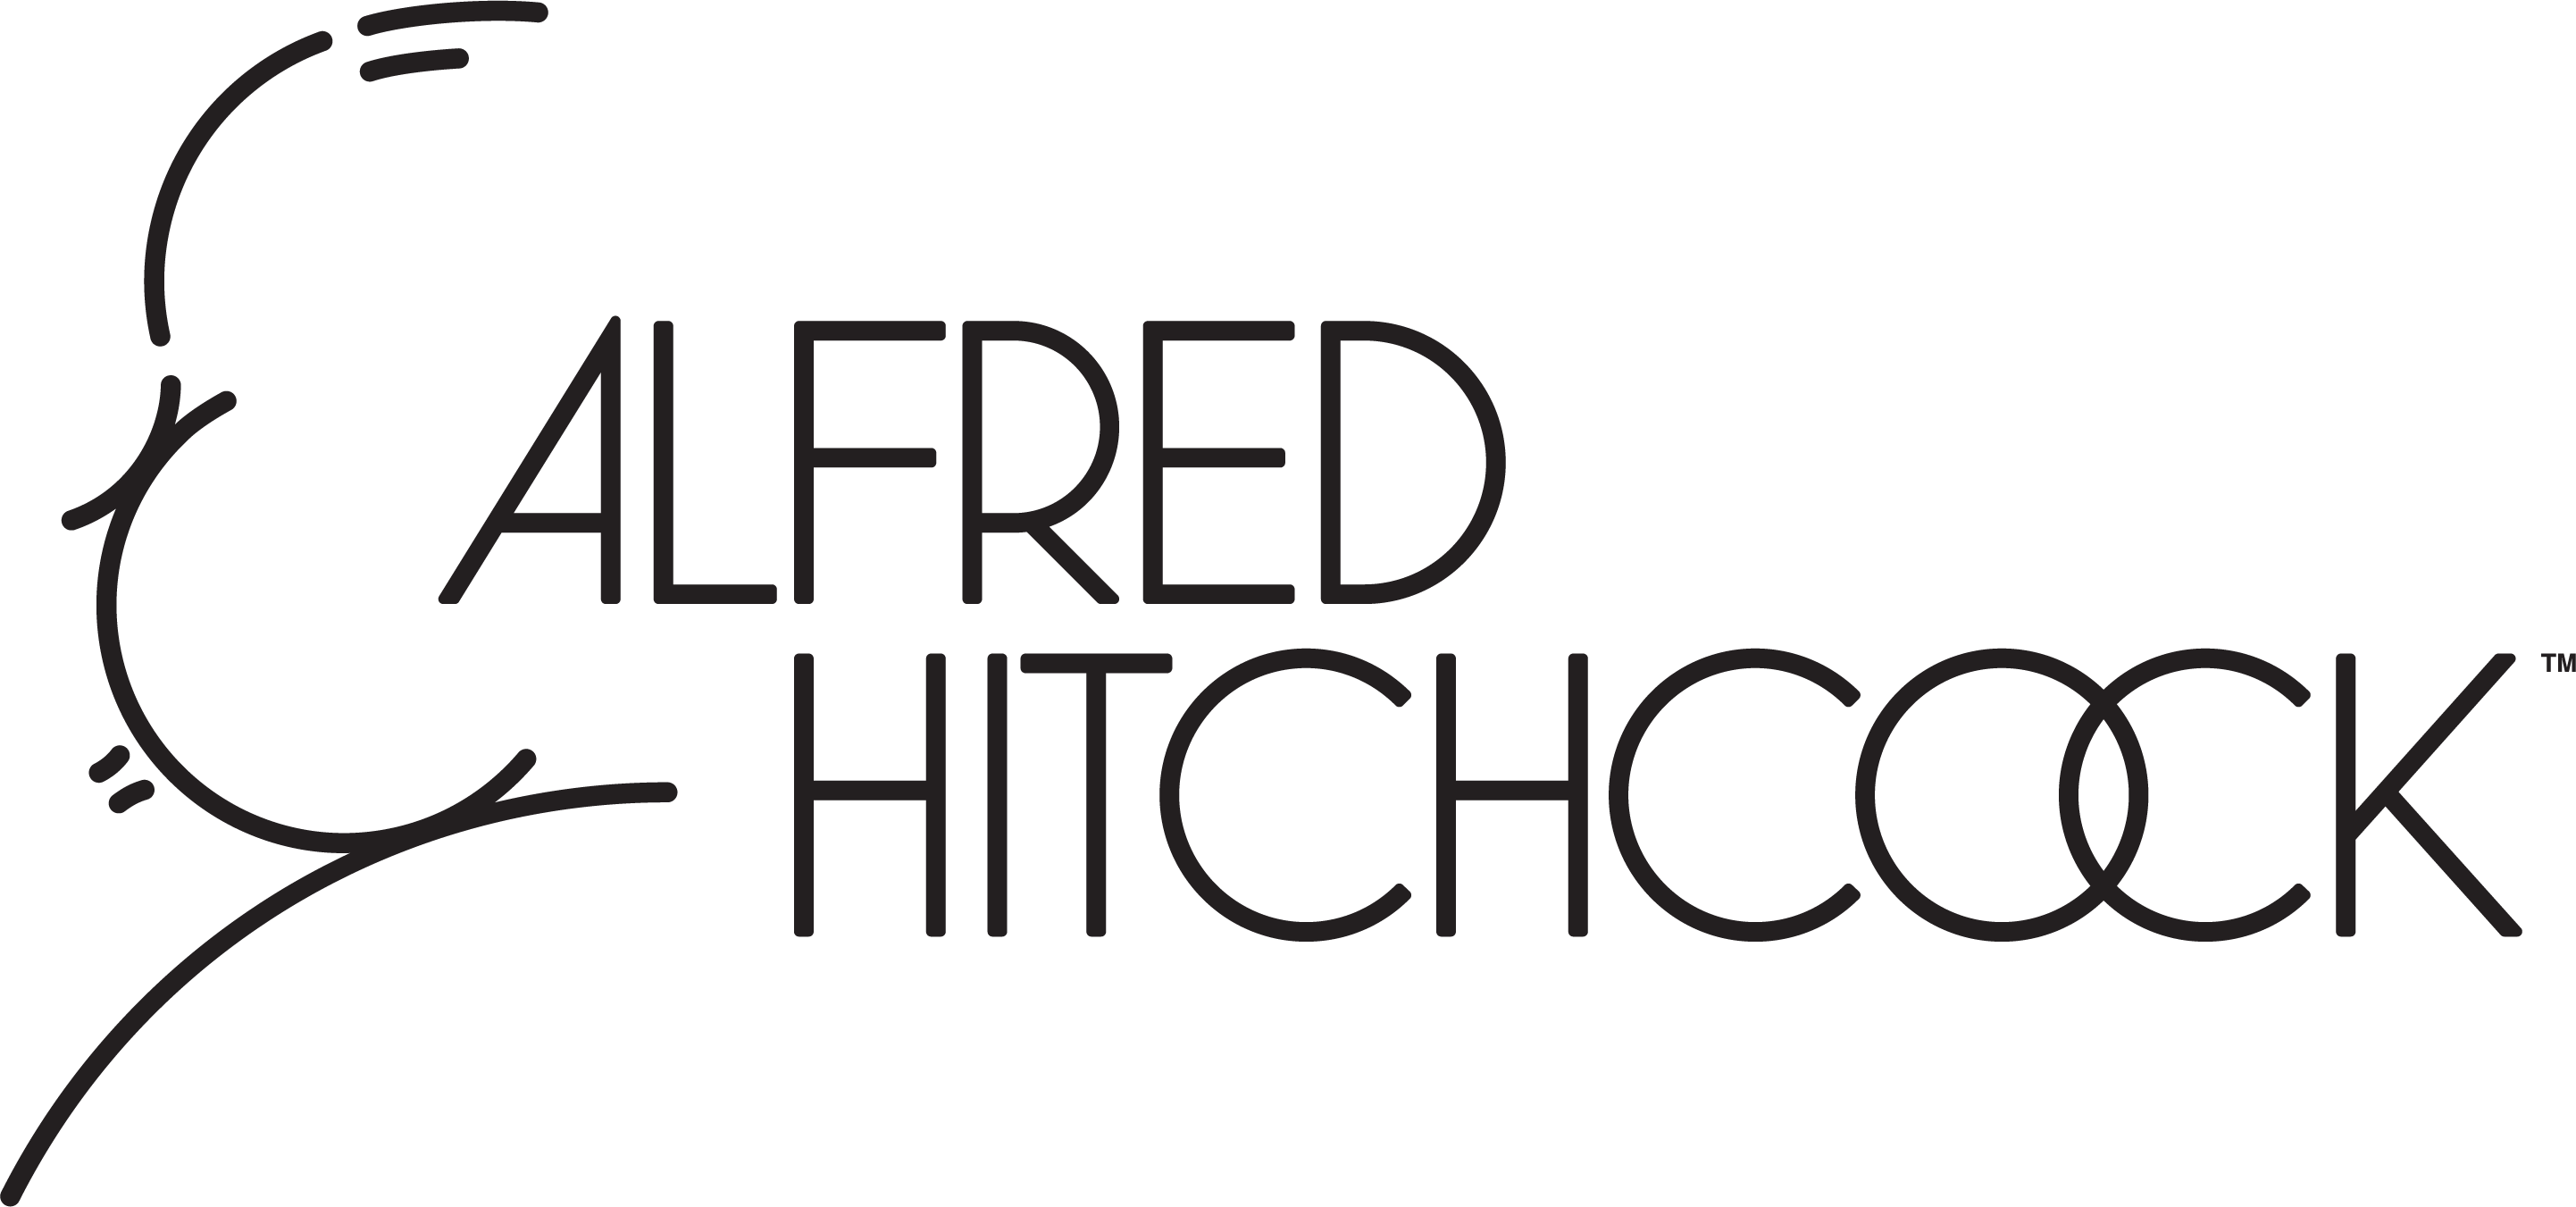 hitchcock_logo_03.png